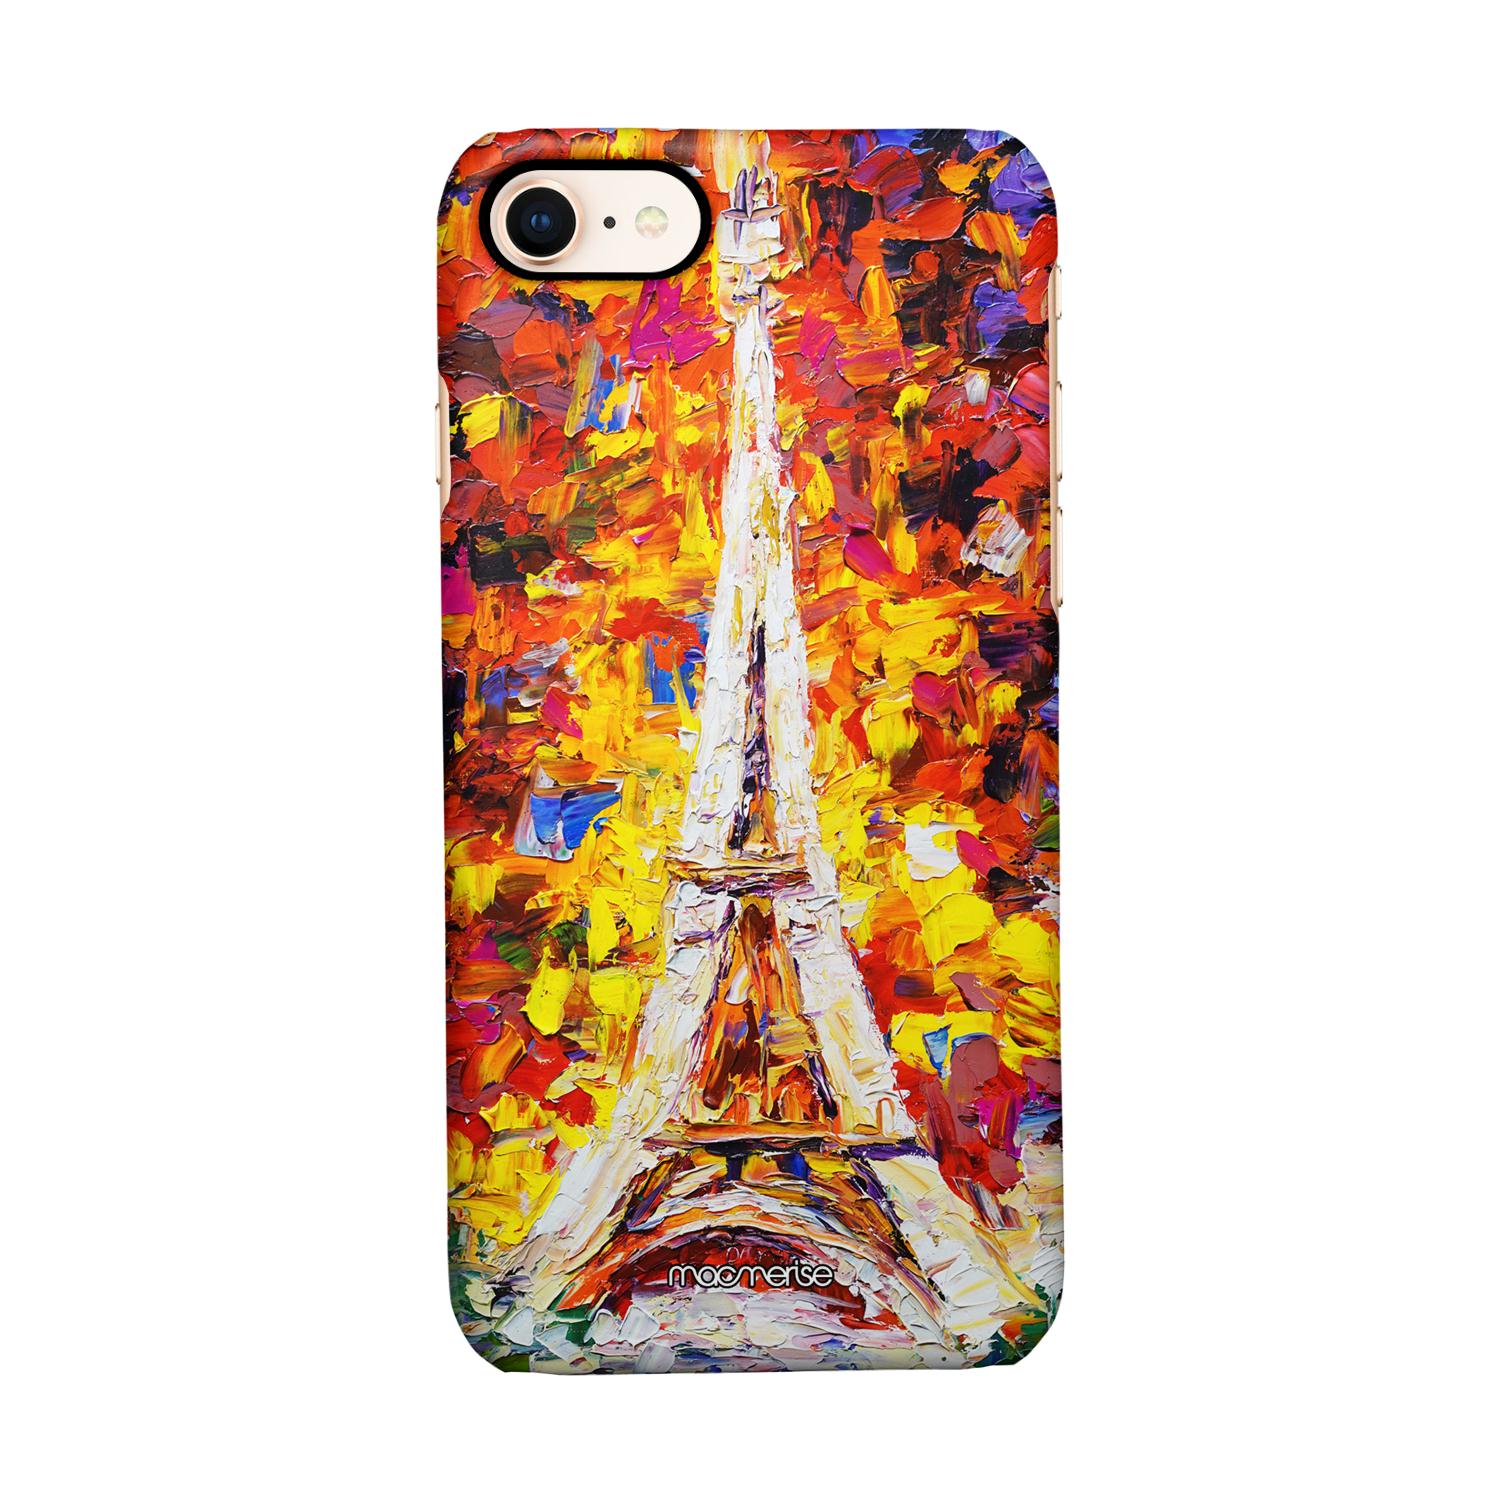 Buy Artistic Eifel - Sleek Phone Case for iPhone 7 Online